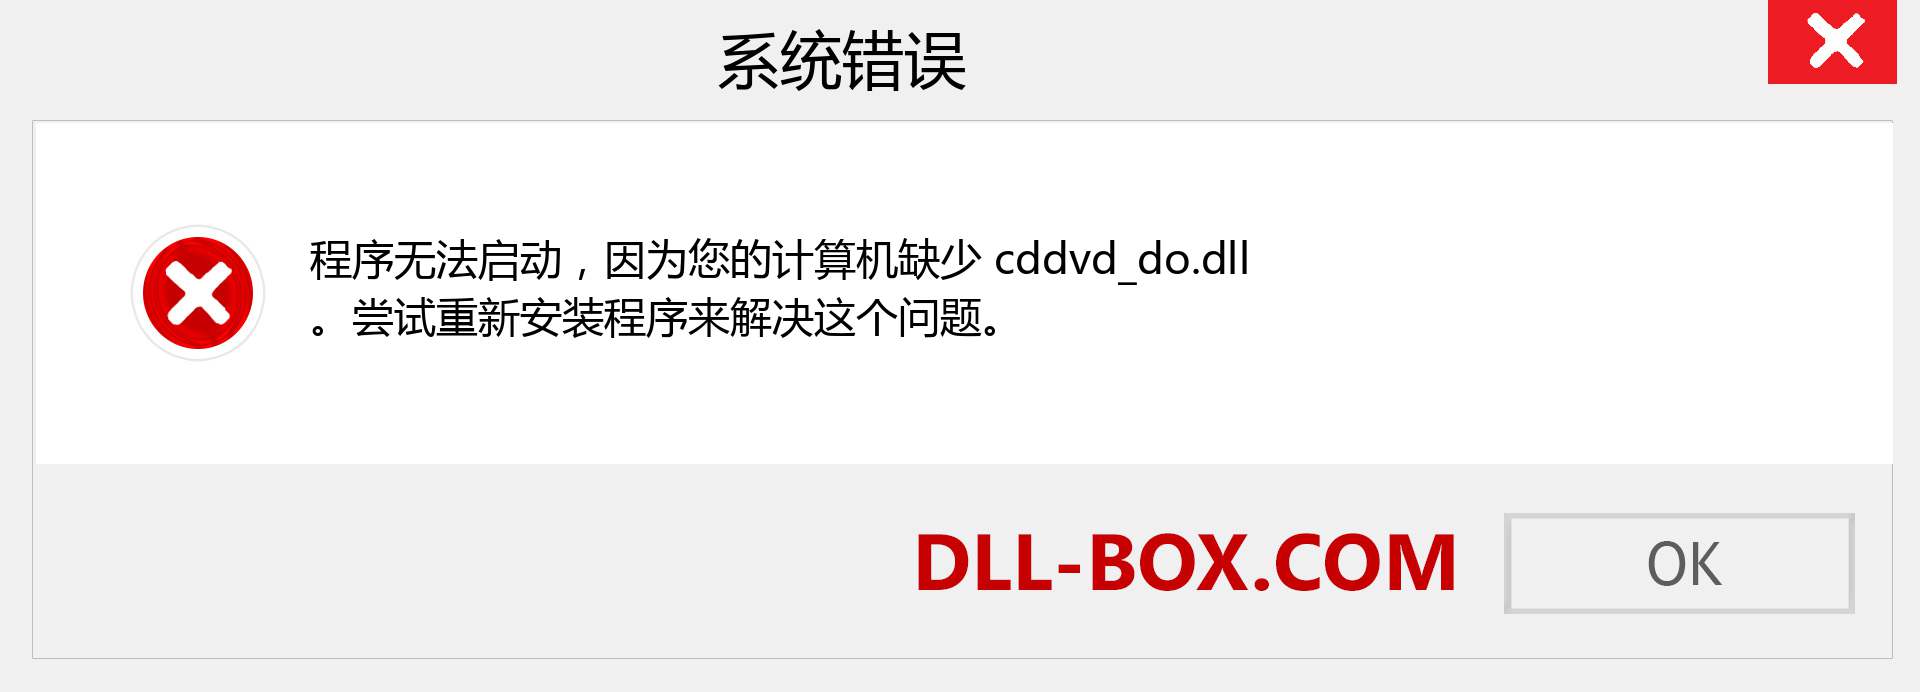 cddvd_do.dll 文件丢失？。 适用于 Windows 7、8、10 的下载 - 修复 Windows、照片、图像上的 cddvd_do dll 丢失错误